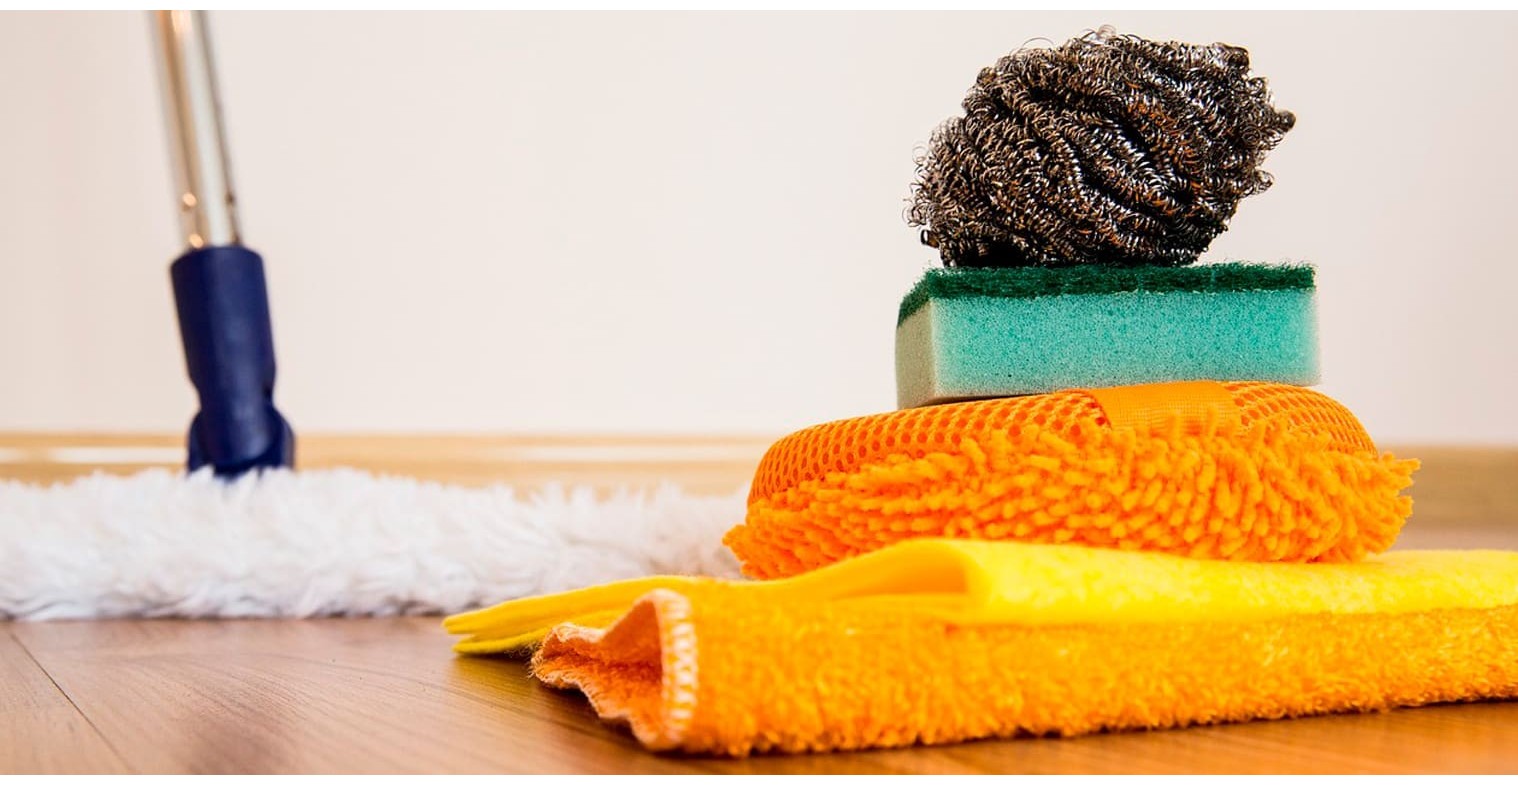 Ventajas de usar un Limpiador Multiusos para tu hogar - Agerul